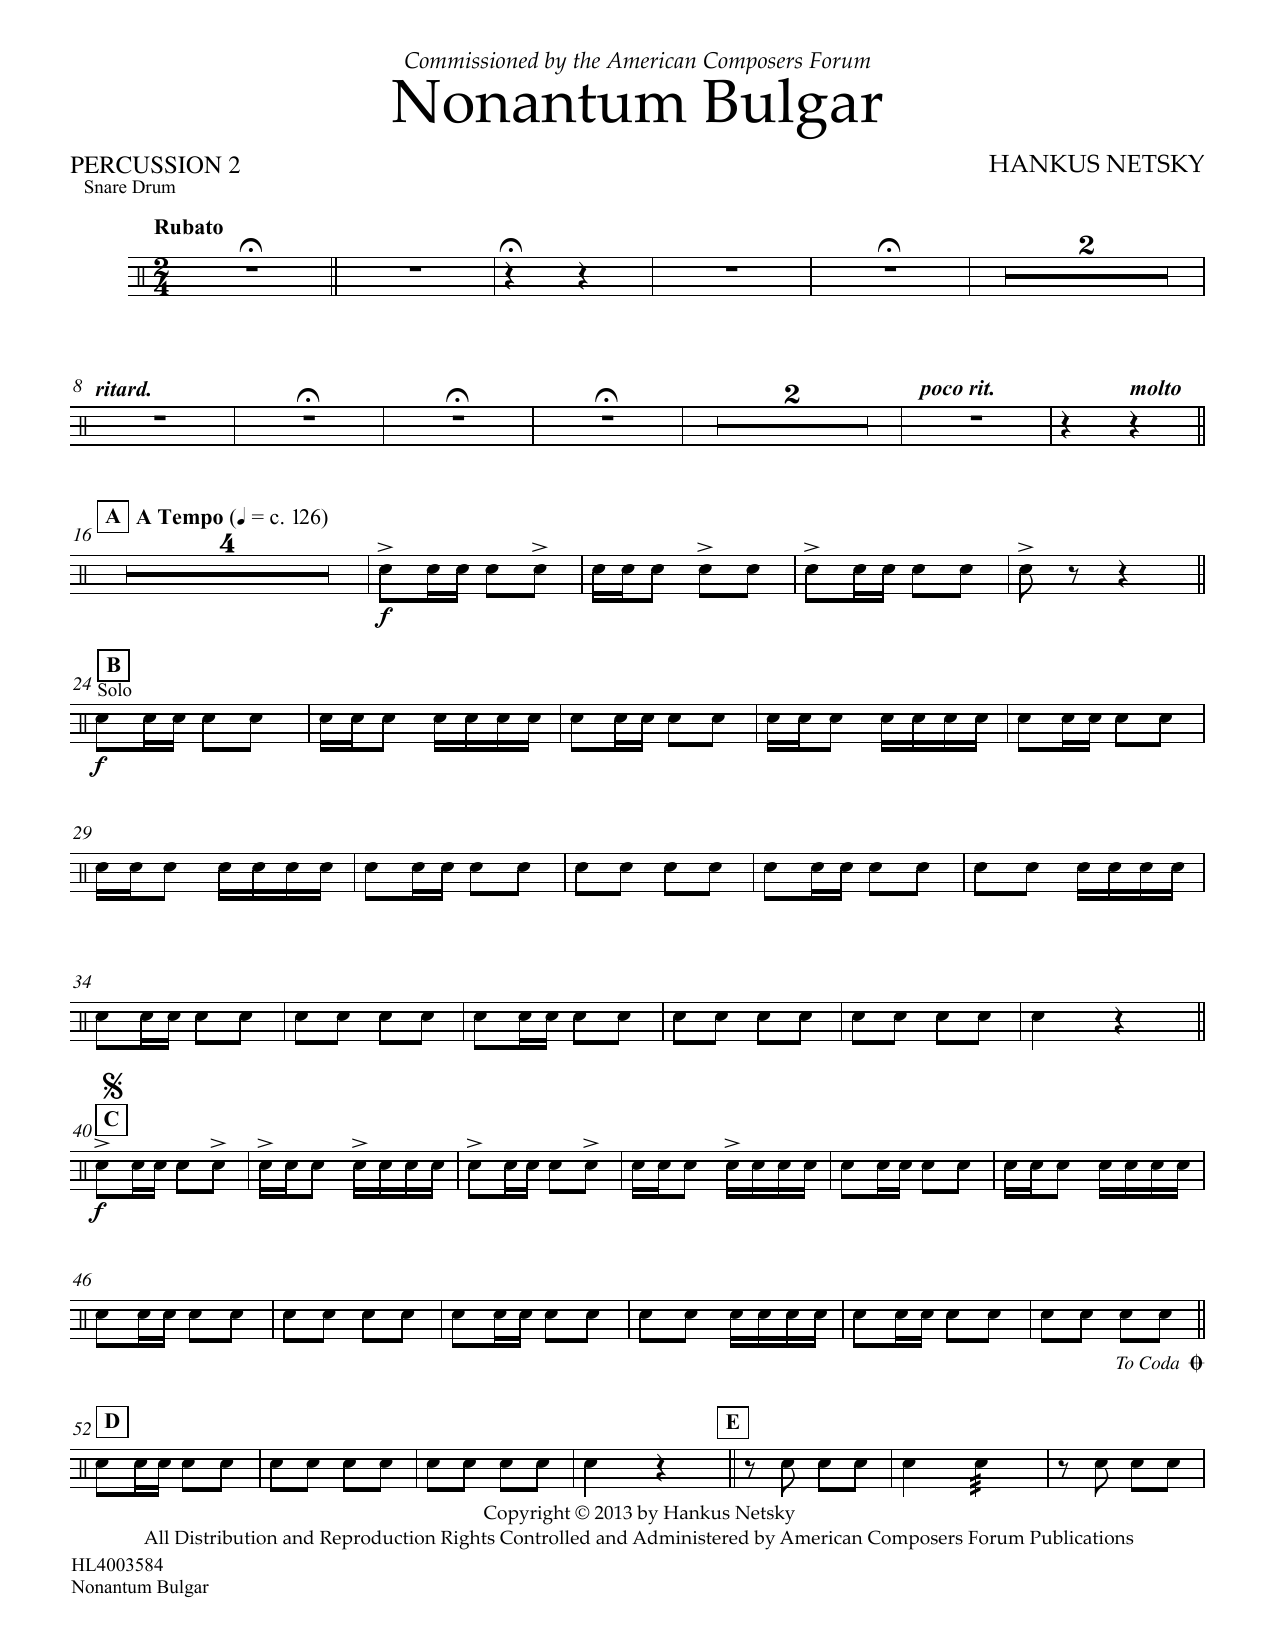 Hankus Netsky Nonantum Bulgar - Percussion 2 sheet music notes and chords arranged for Concert Band